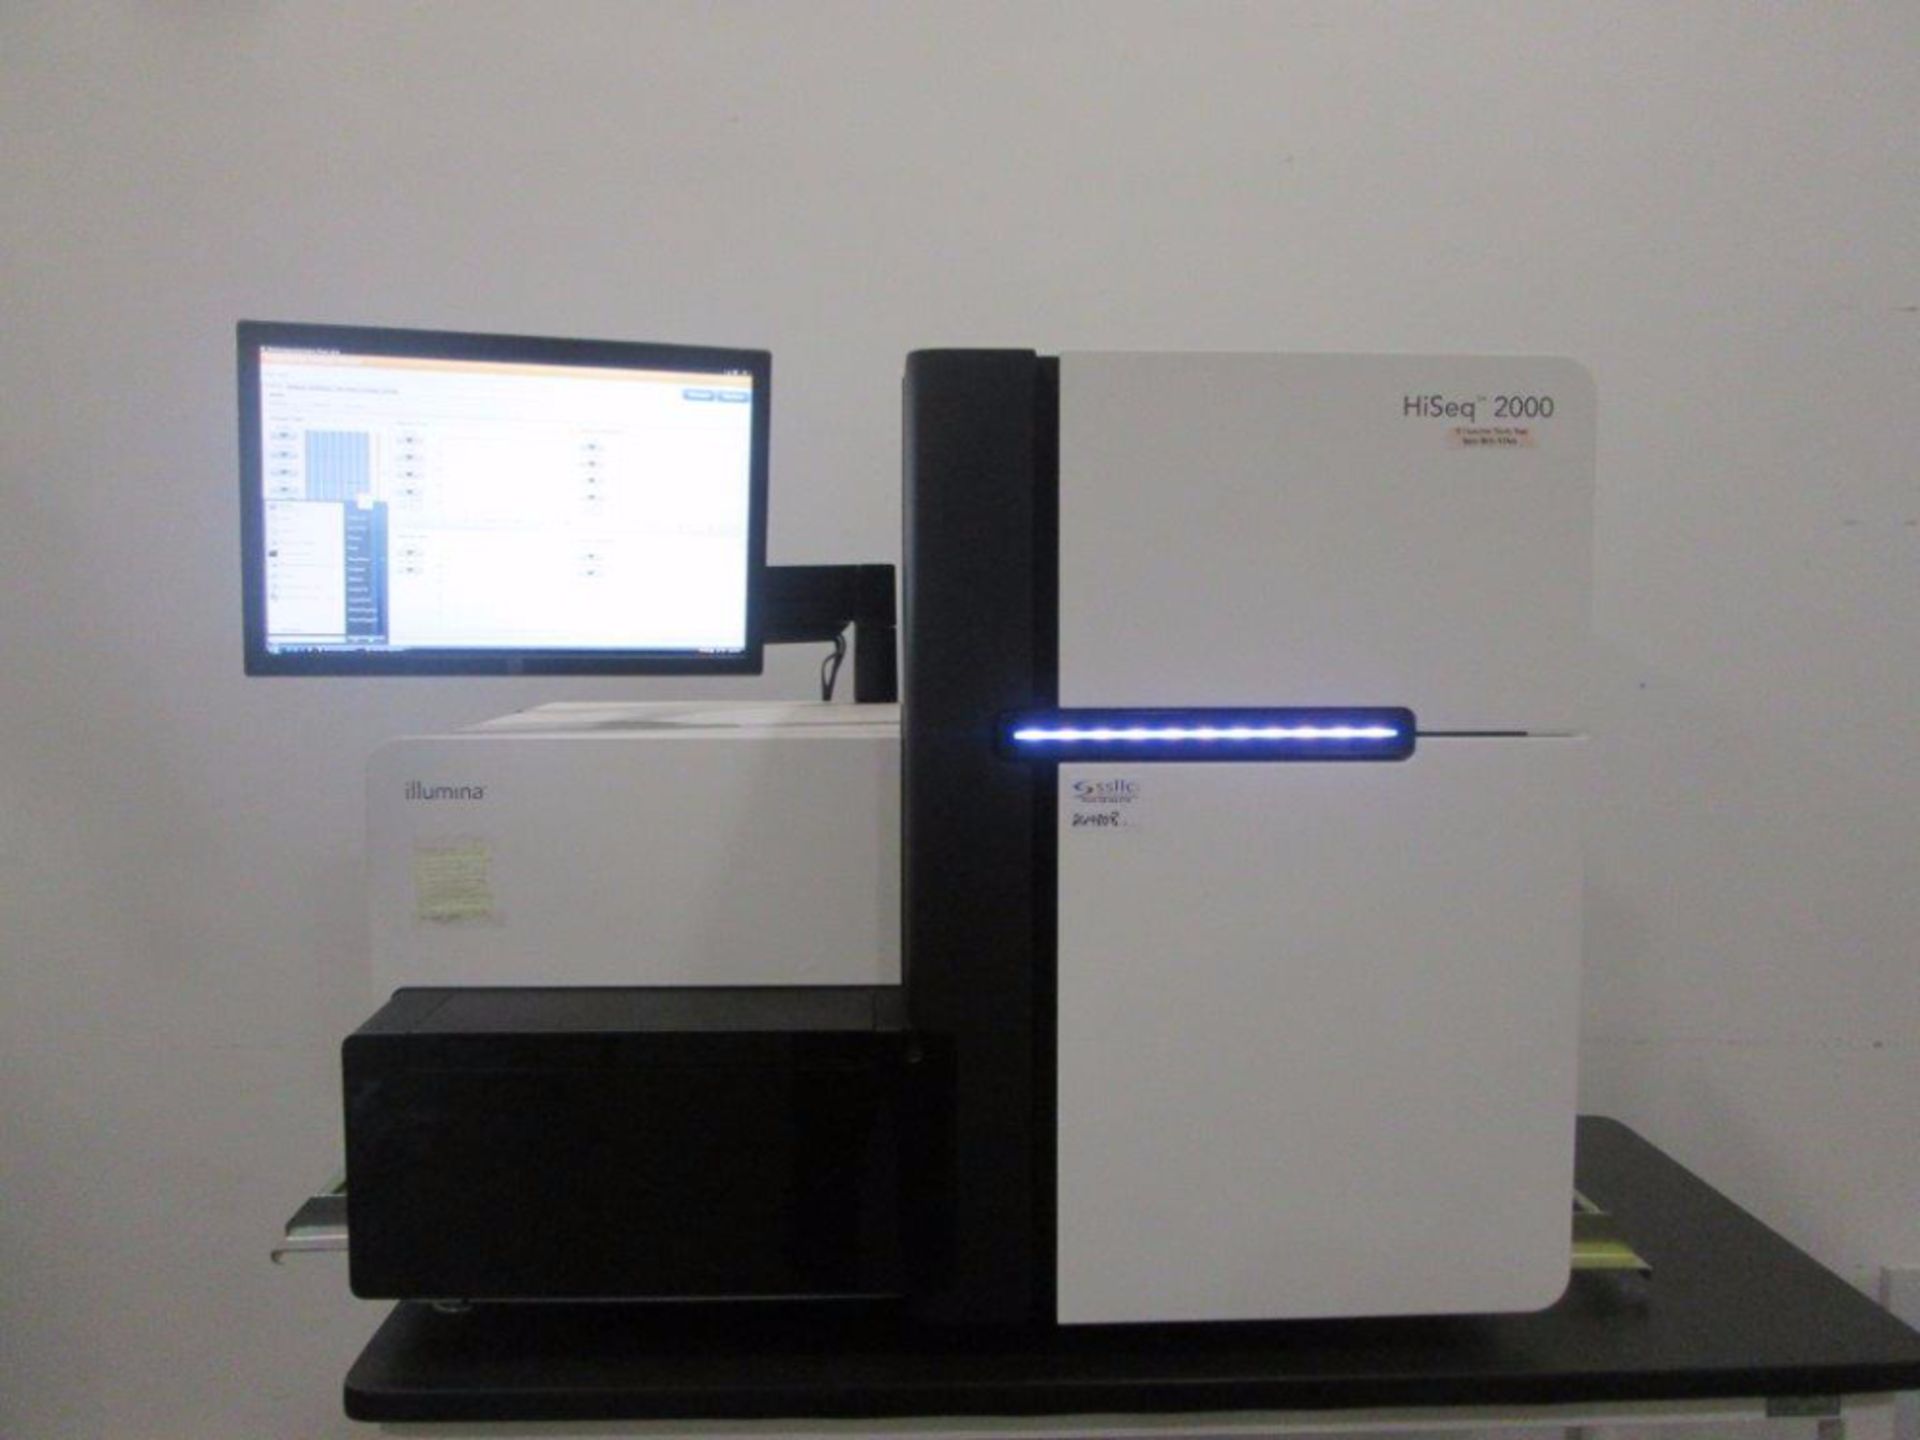 Illumina HiSeq 2000 Sequencing System